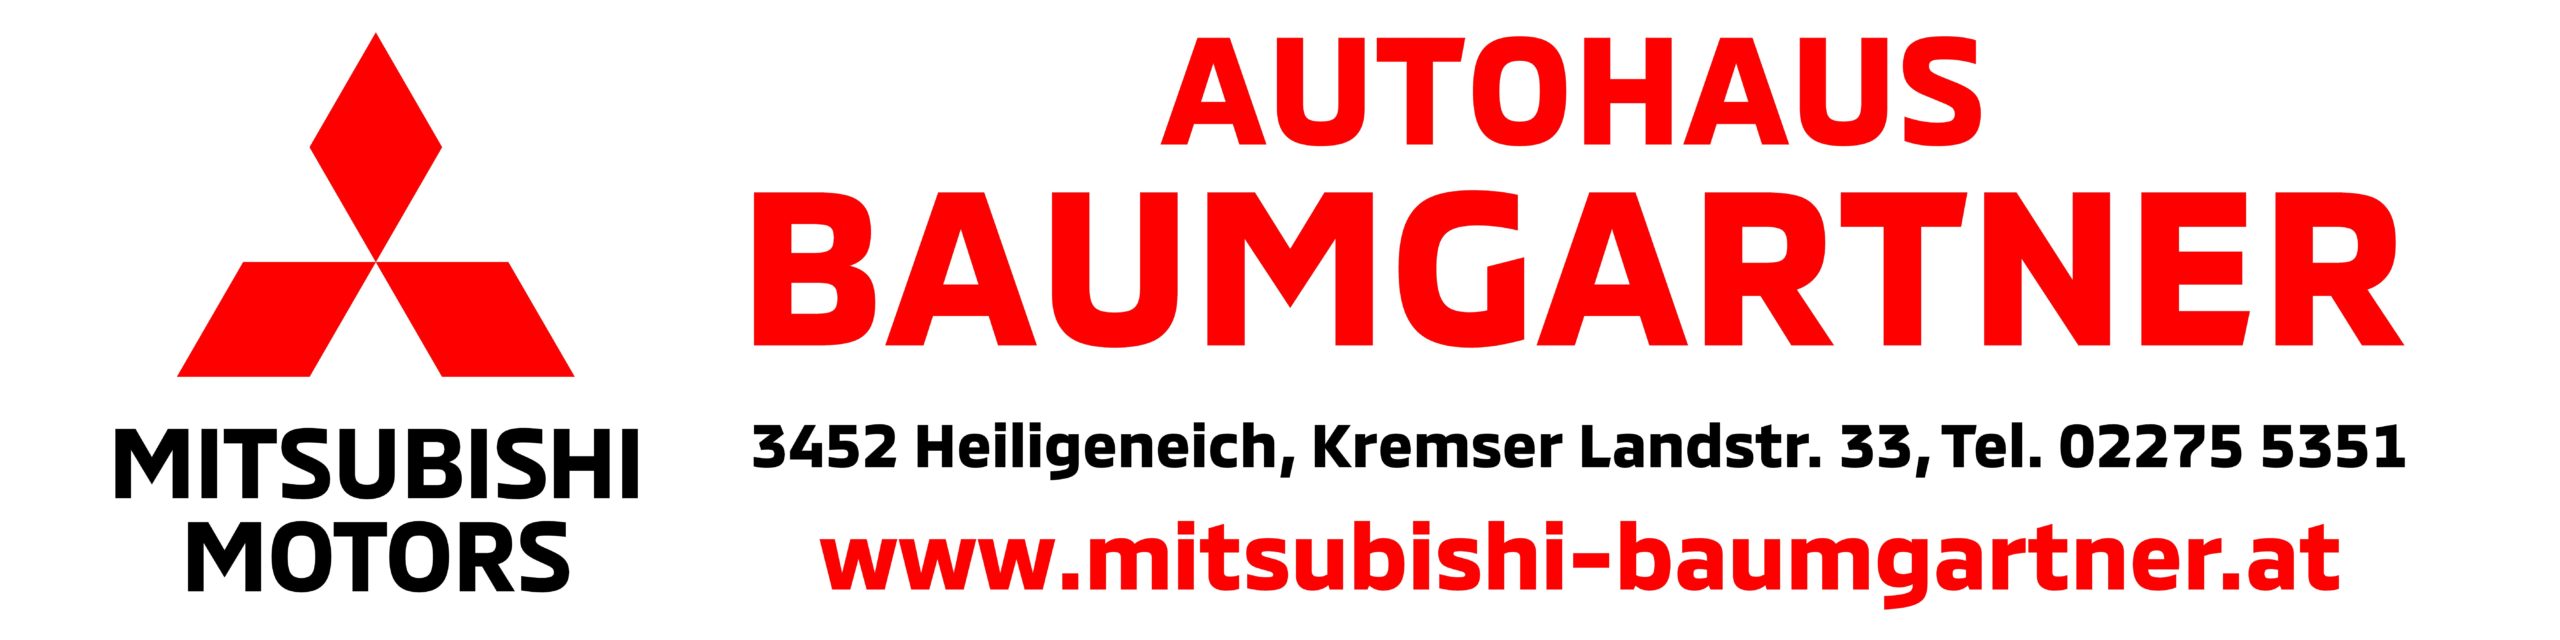 Autohaus Baumgartner